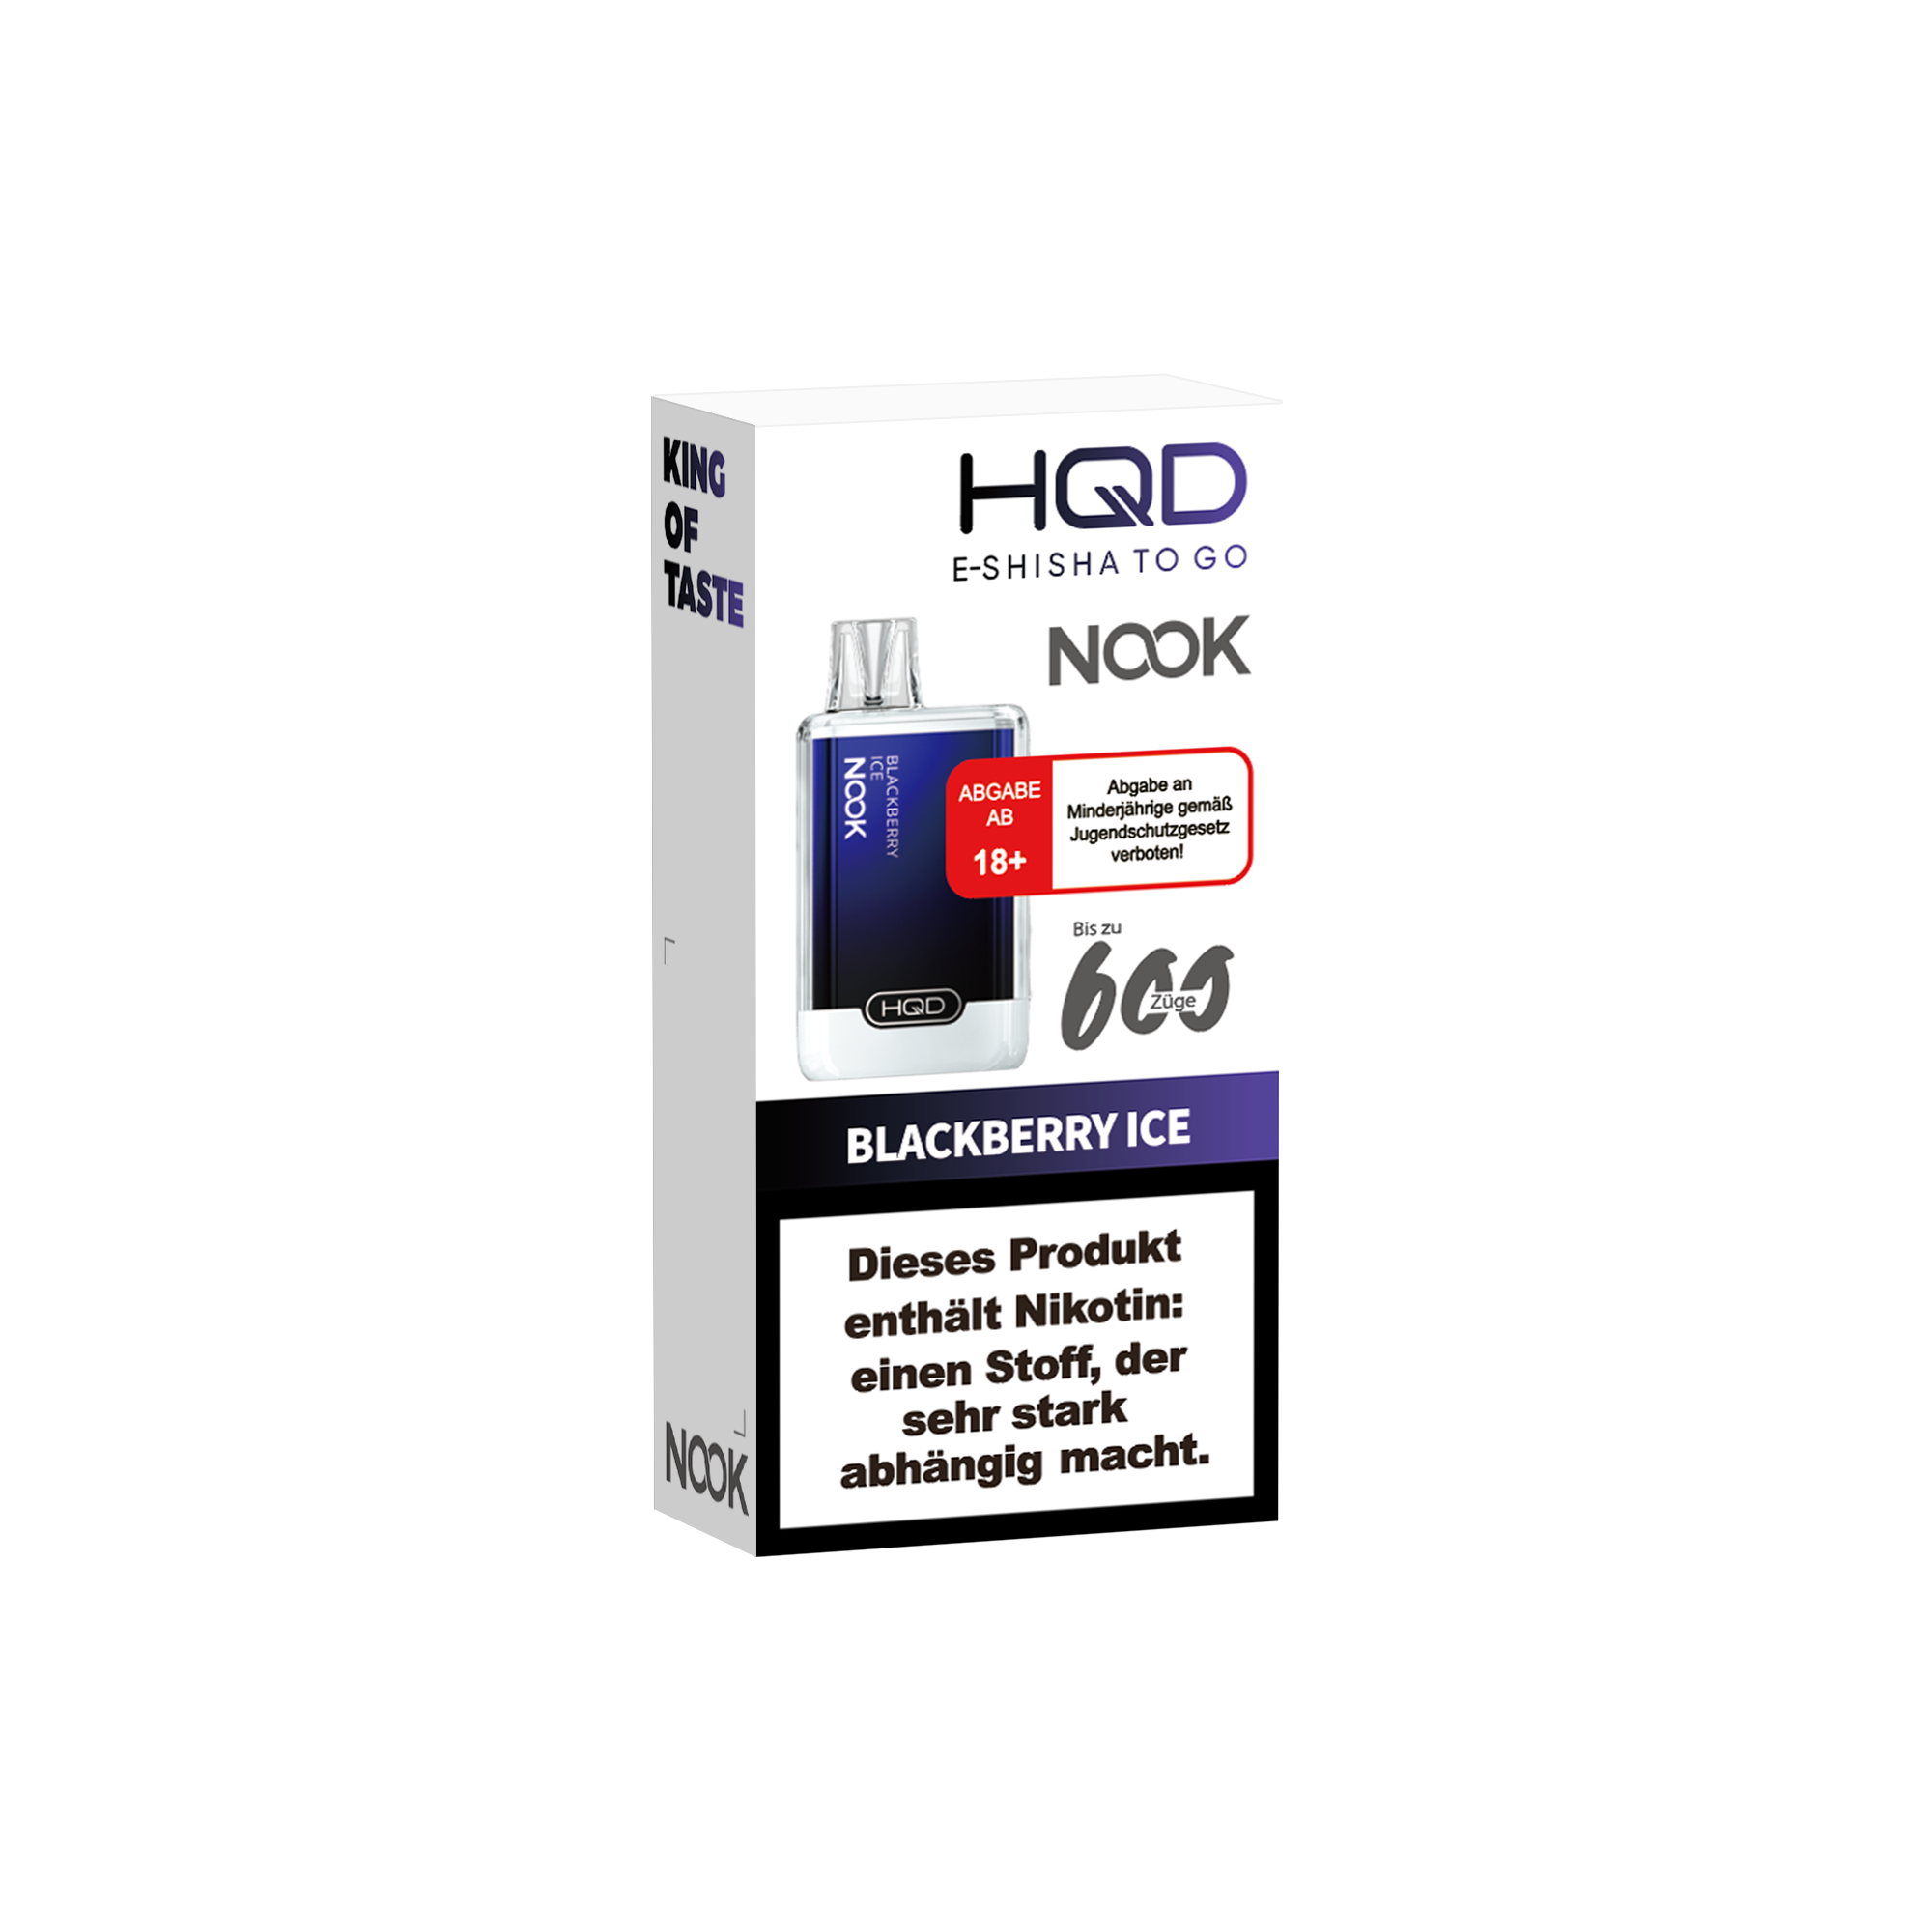 E-Zigarette HQD Nook BLACKBERRY ICE 18mg Nikotin 600